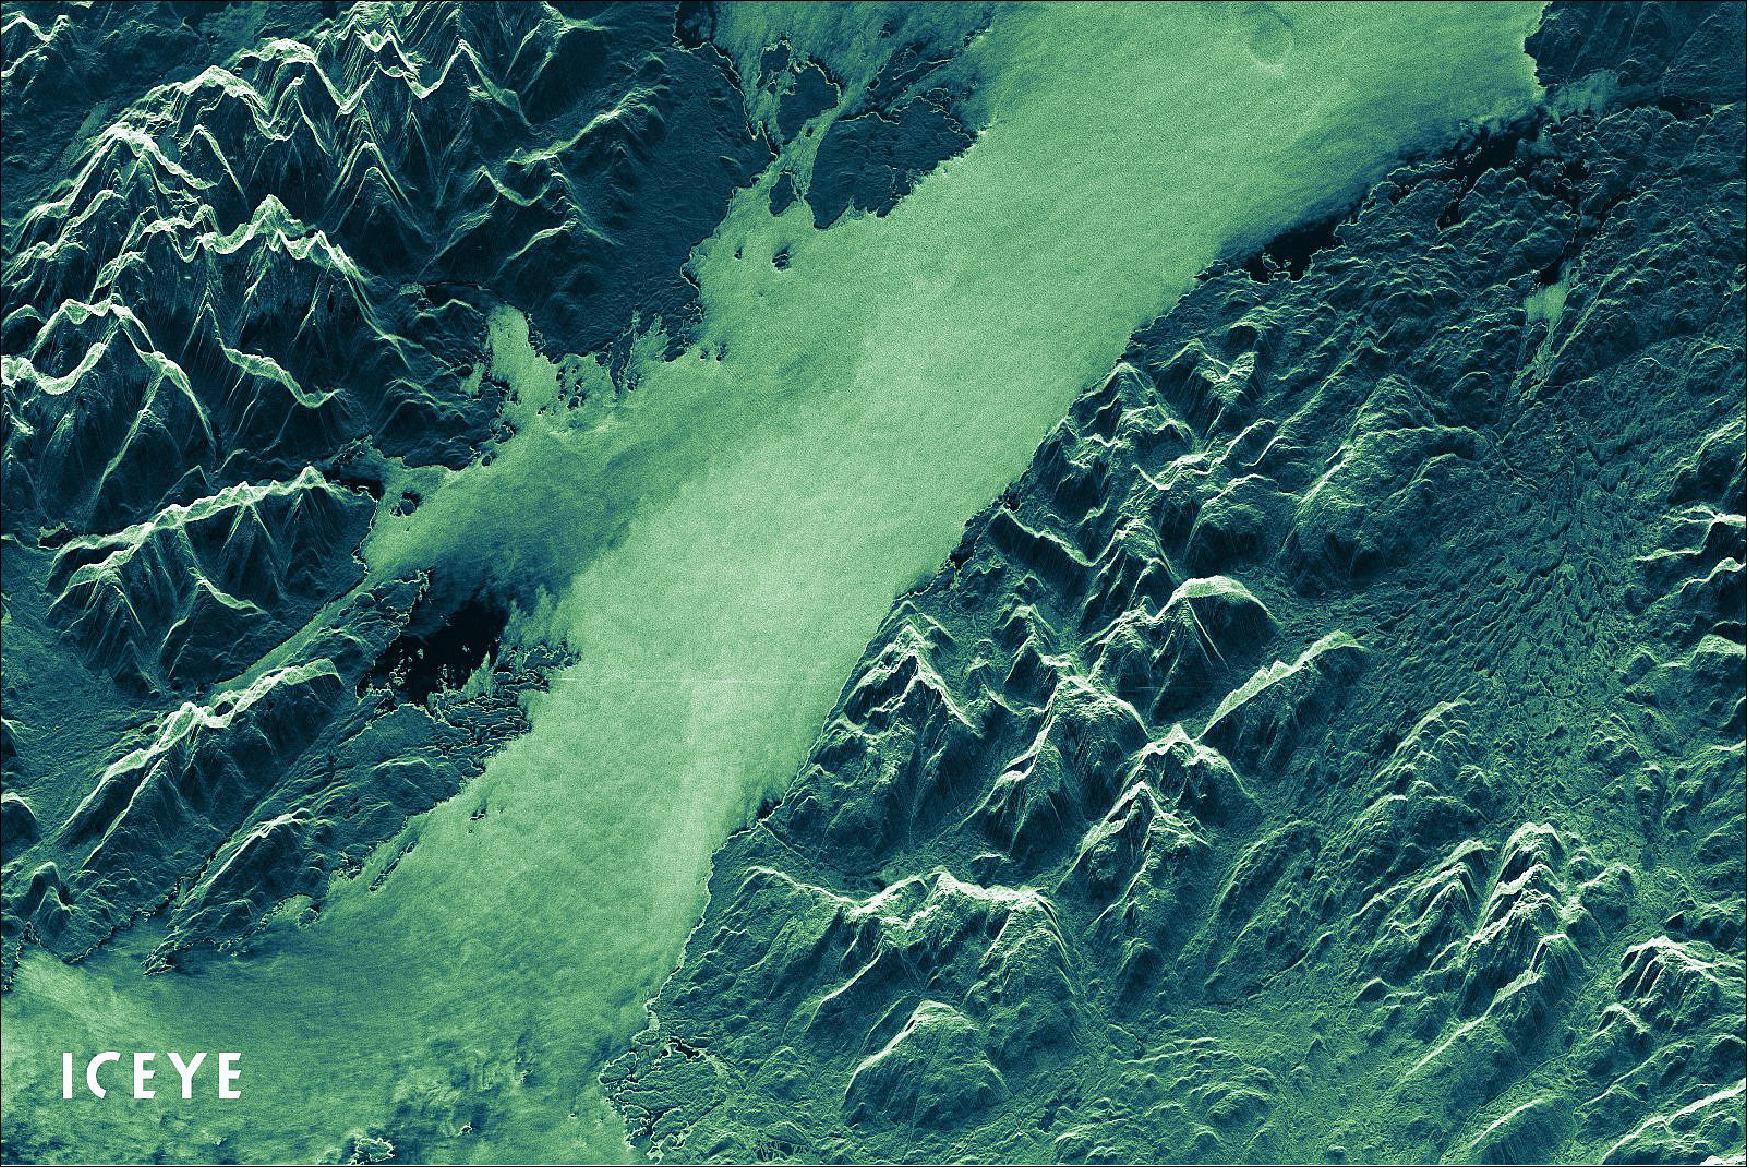 Figure 35: ICEYE SAR image of an Alaska scene (image credit: ICEYE)